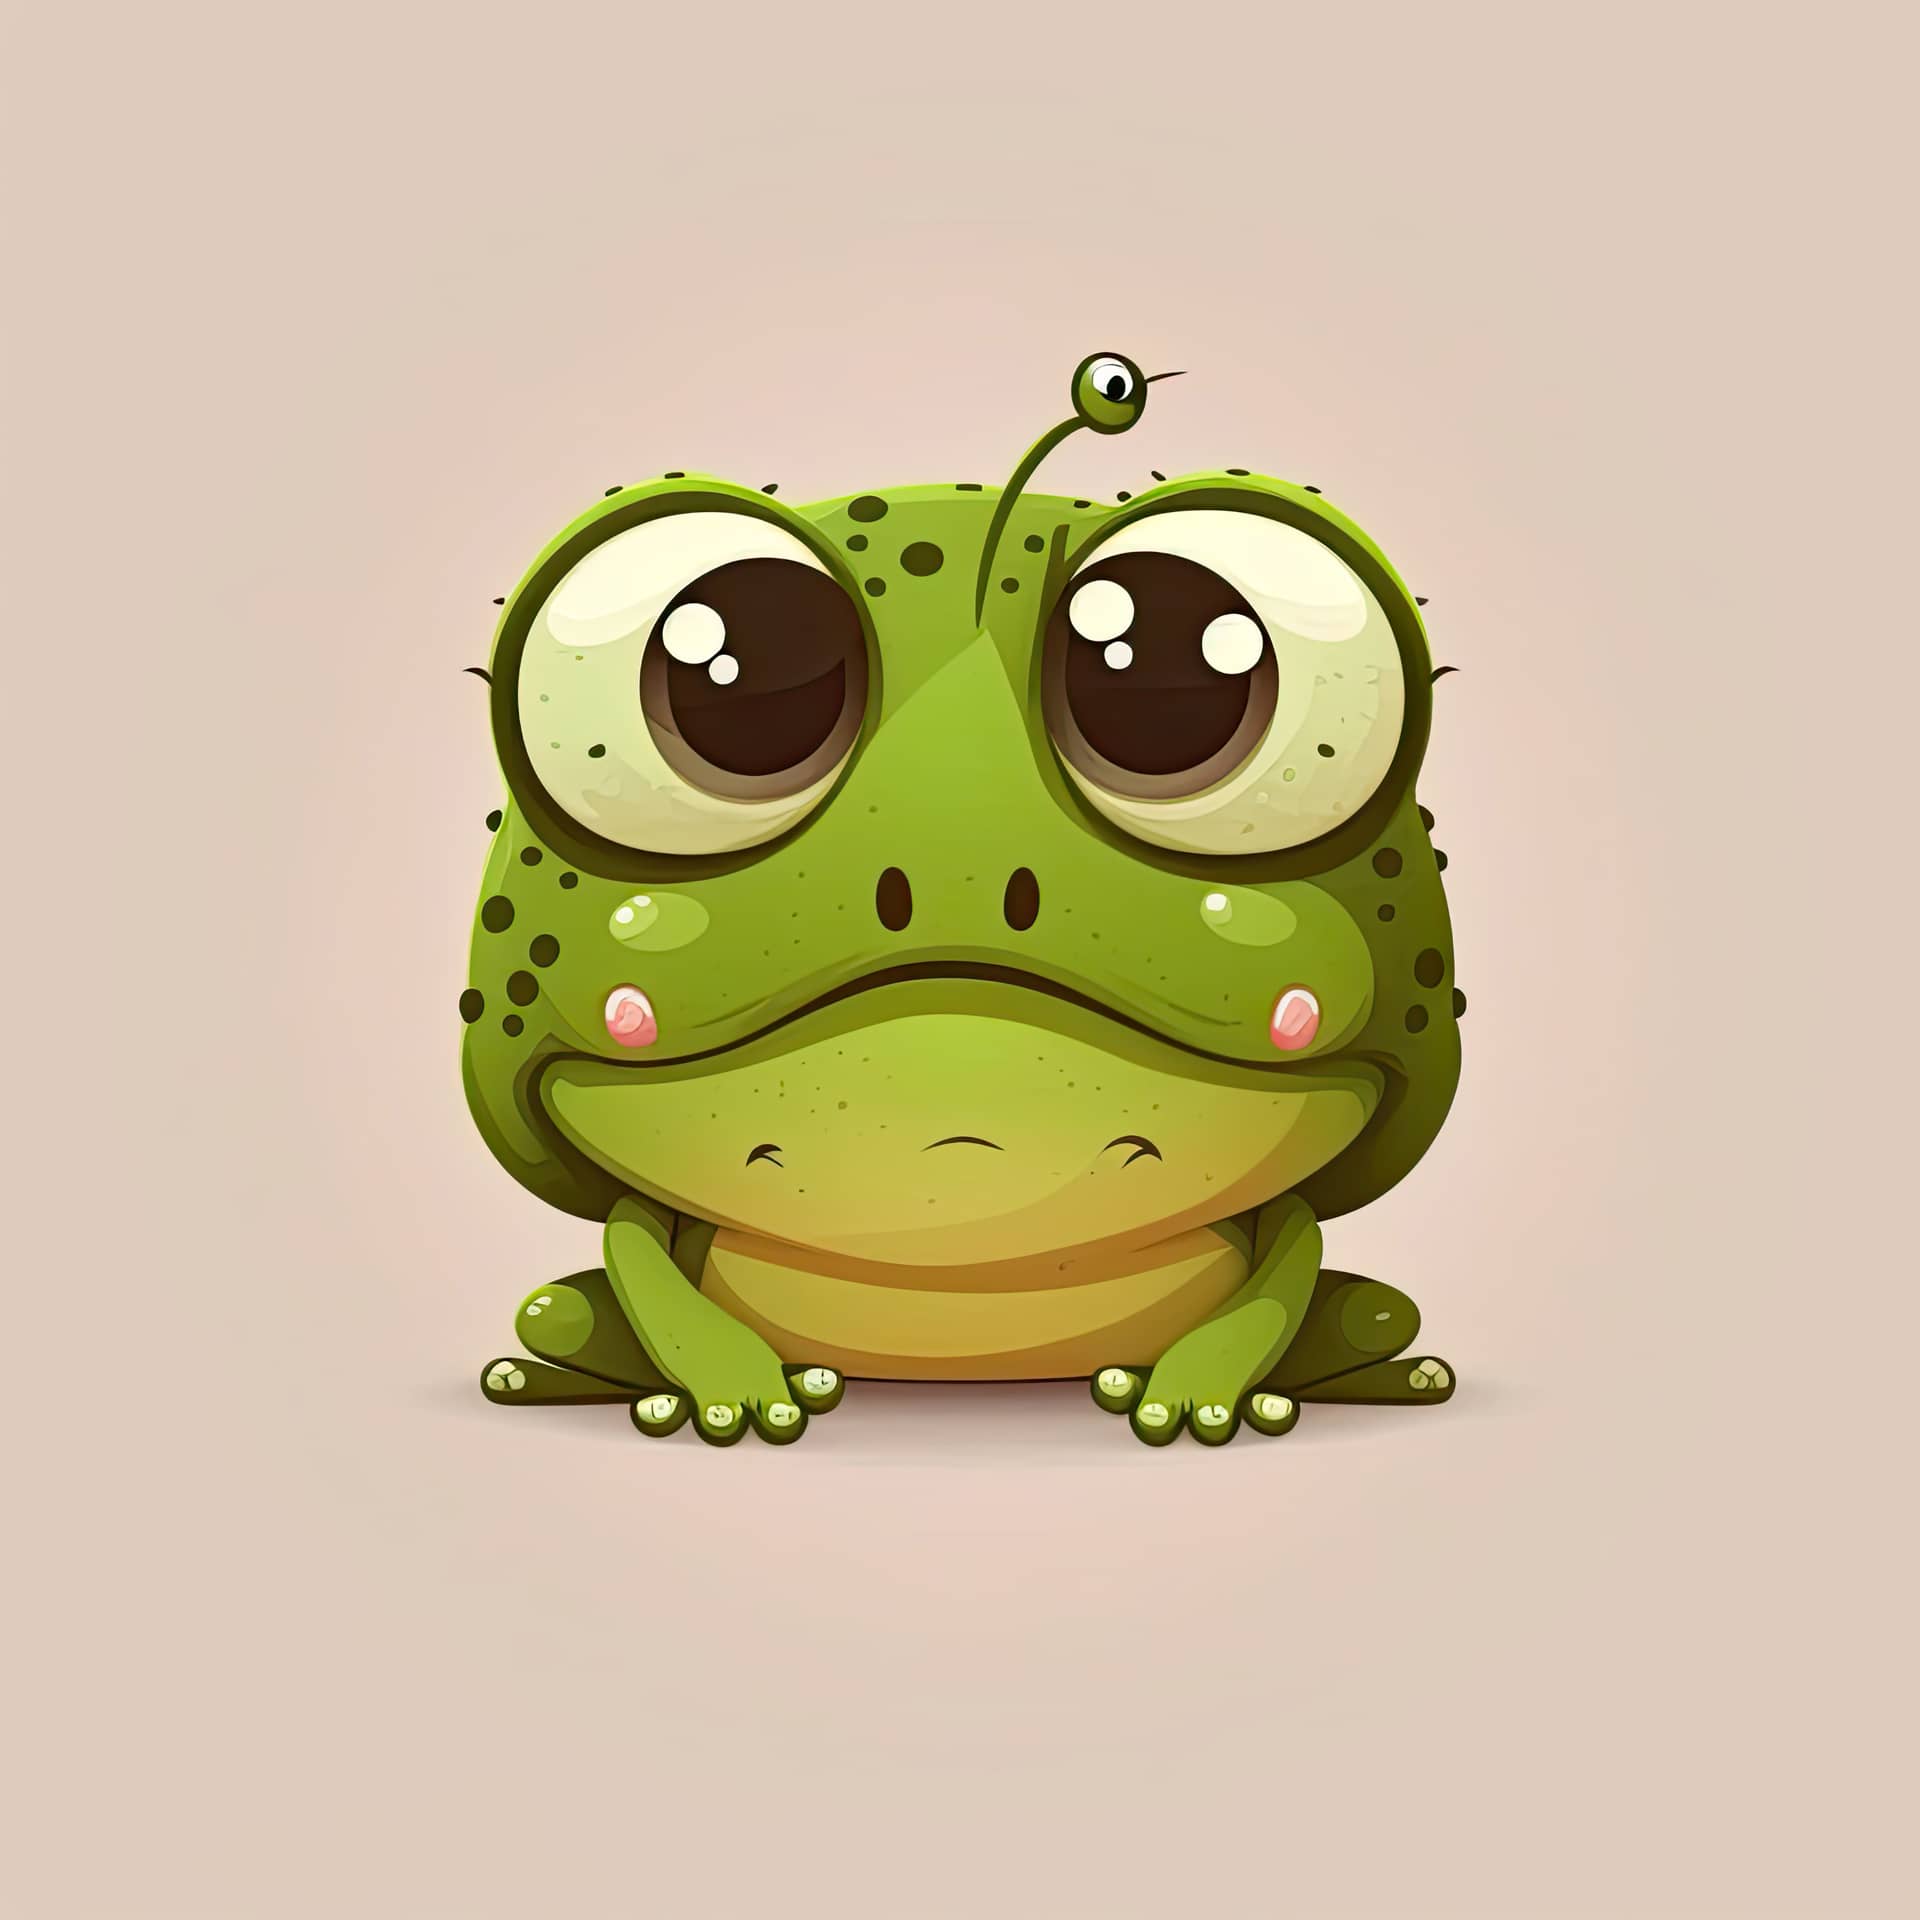 Green frog with big eyes light background color illustration generative